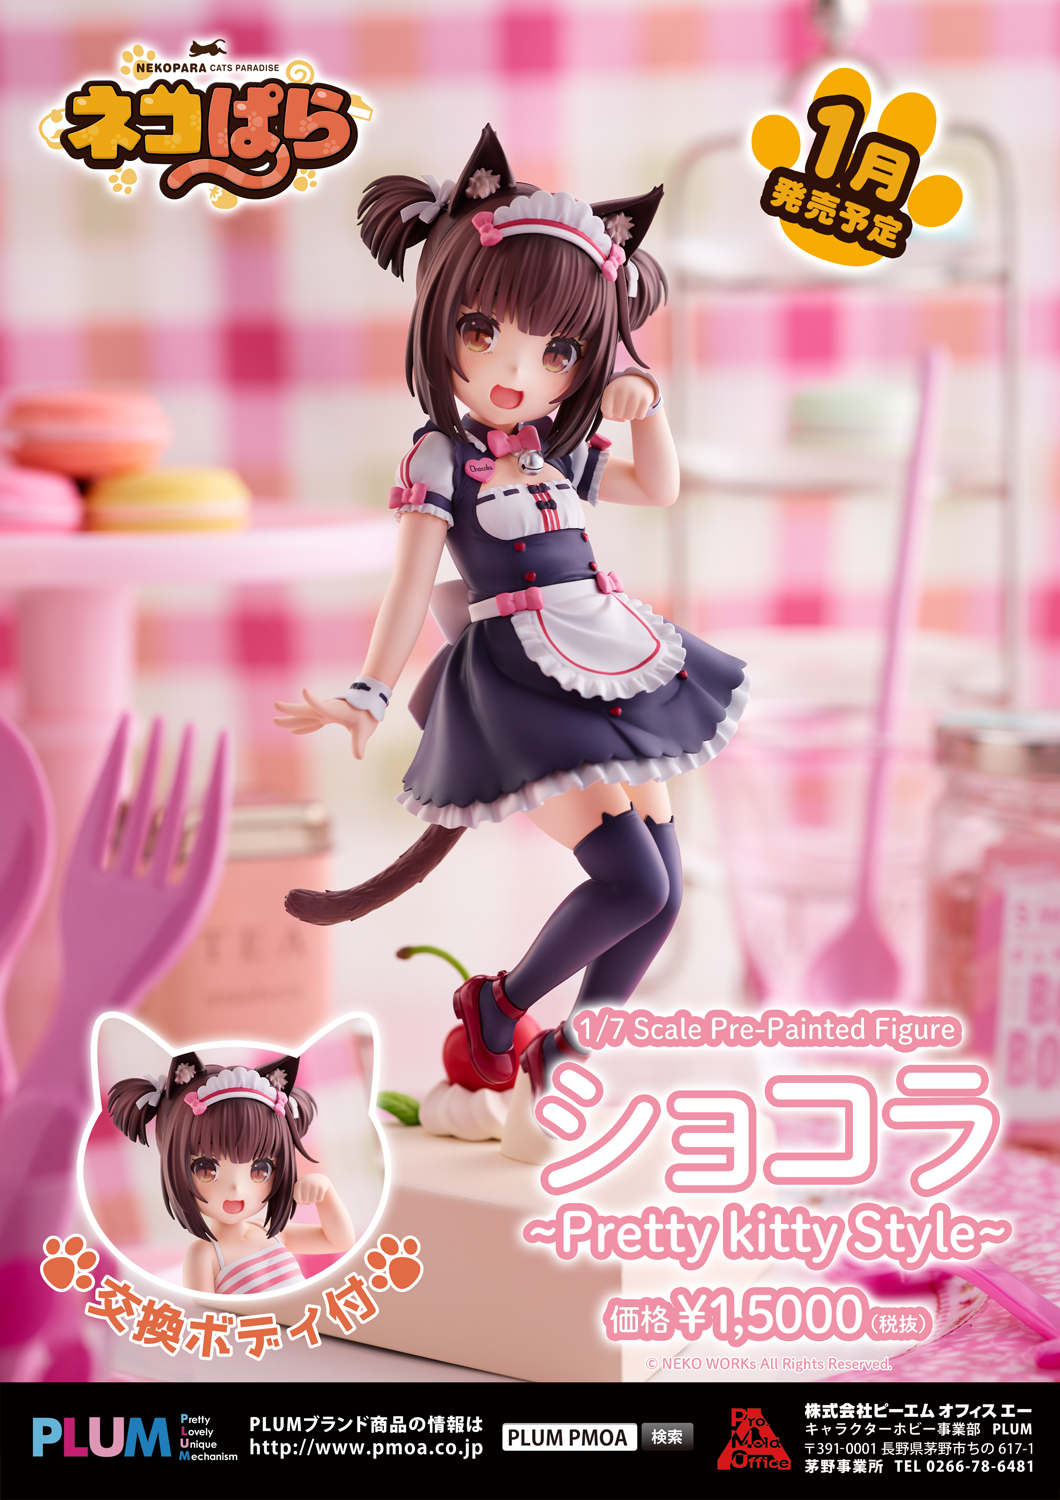 PLUM《猫娘乐园》巧克力〜Pretty kitty Style〜 手办预定明年1月发售